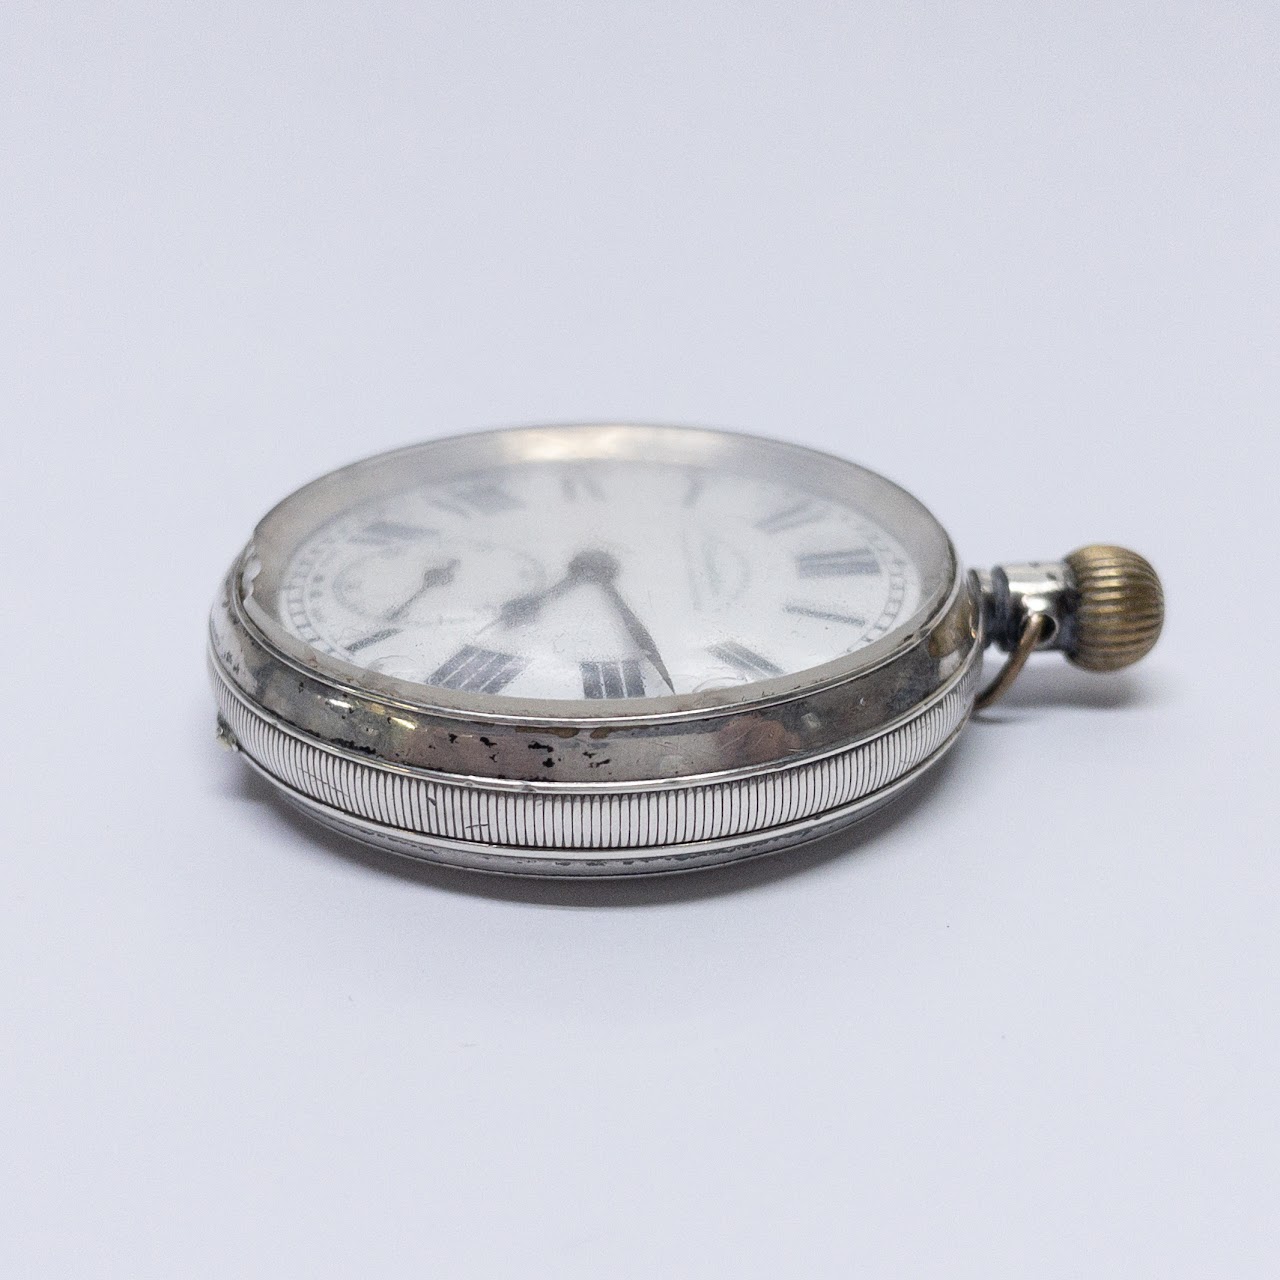 West End "Competition" Antique Pocket Watch